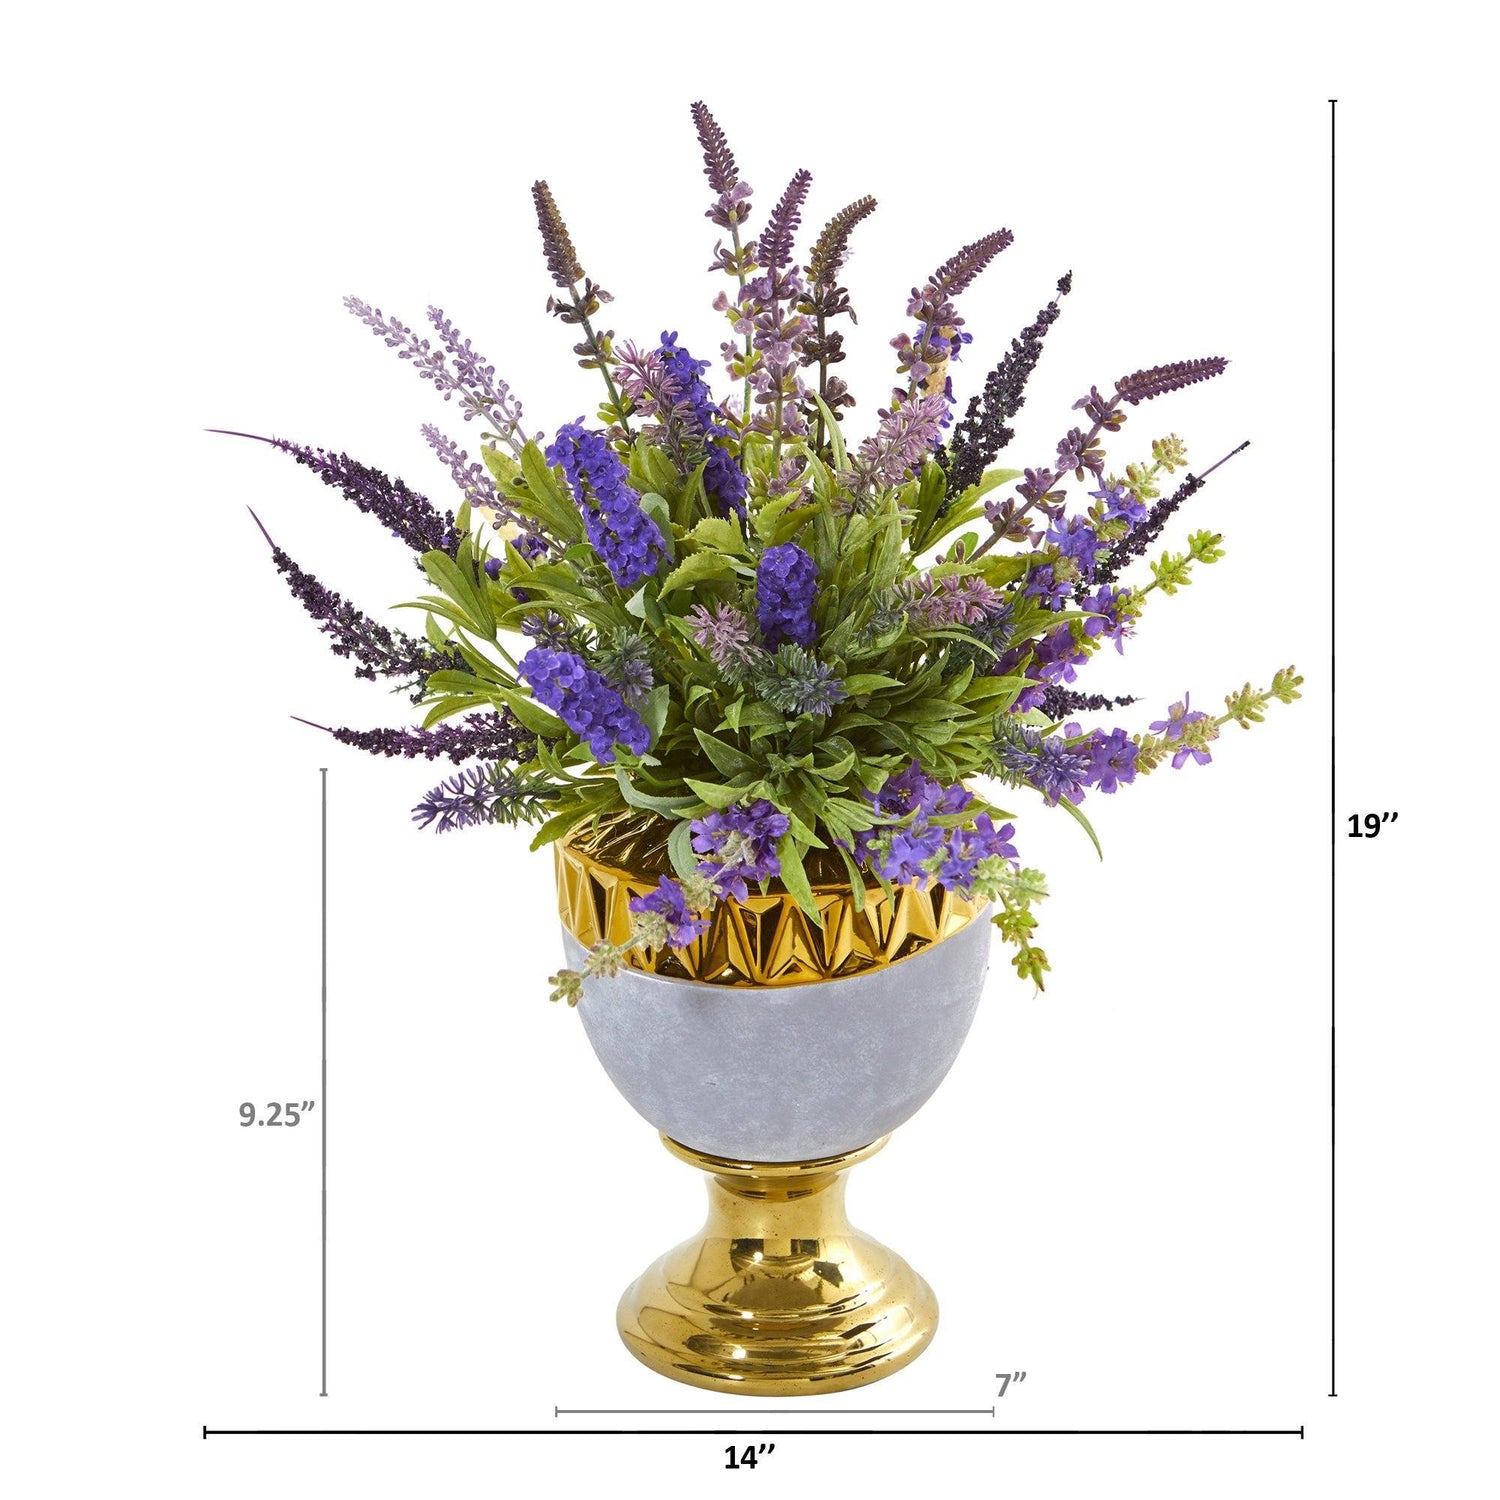 19” Lavender Artificial Arrangement in Decorative Urn